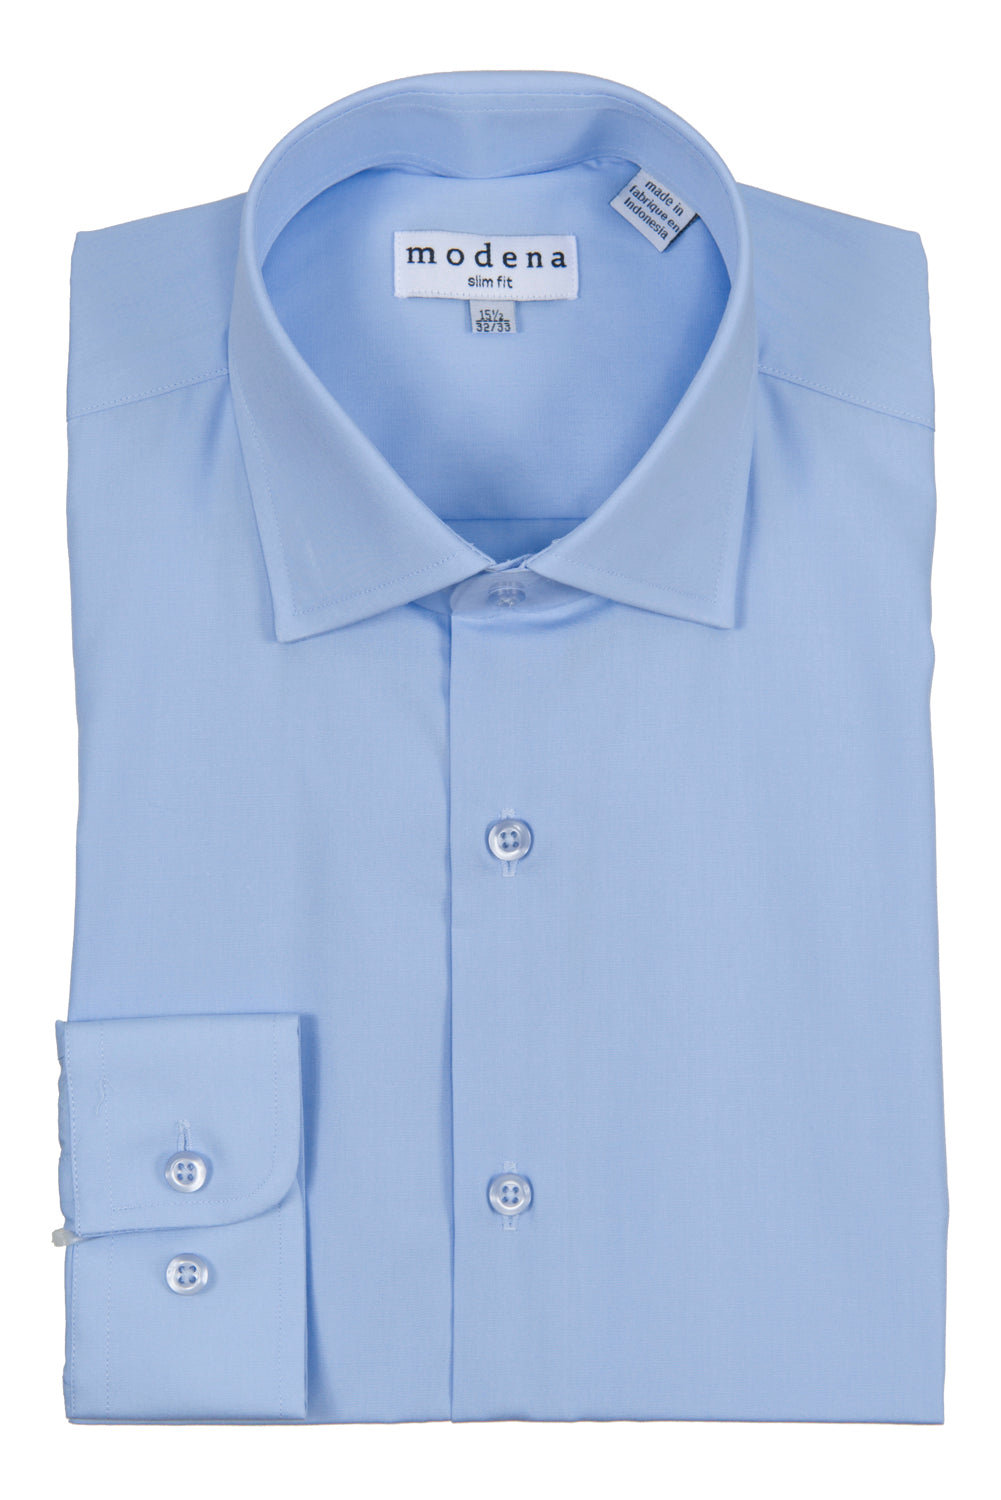 Modena - Powder Blue - Solid - Cotton Blend - Dress Shirt - Slim Fit